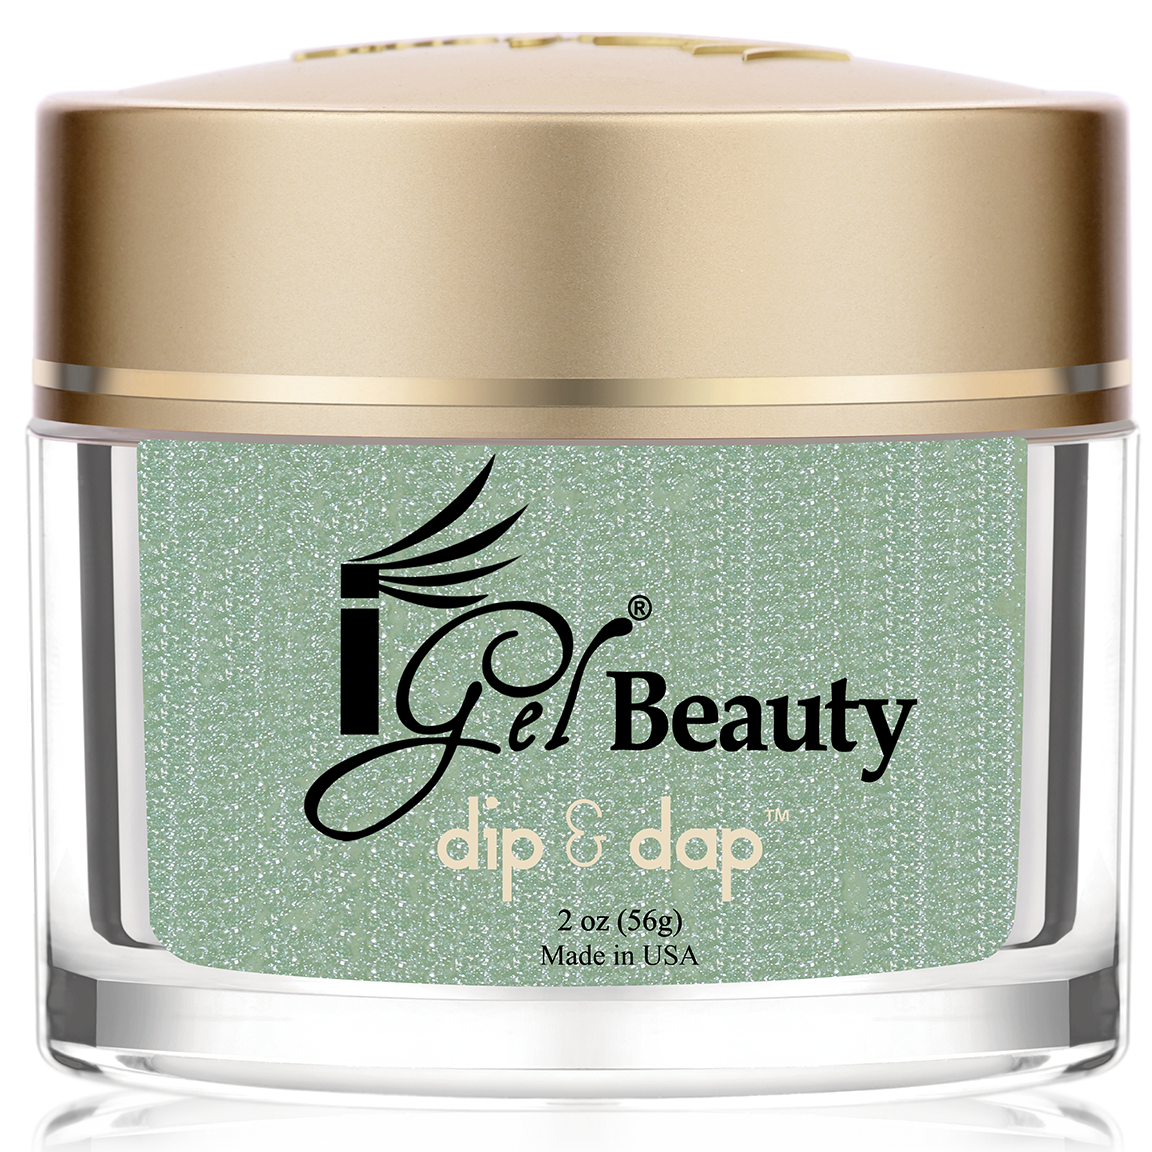 iGel Beauty - Dip & Dap Powder - DD191 Magic Mint